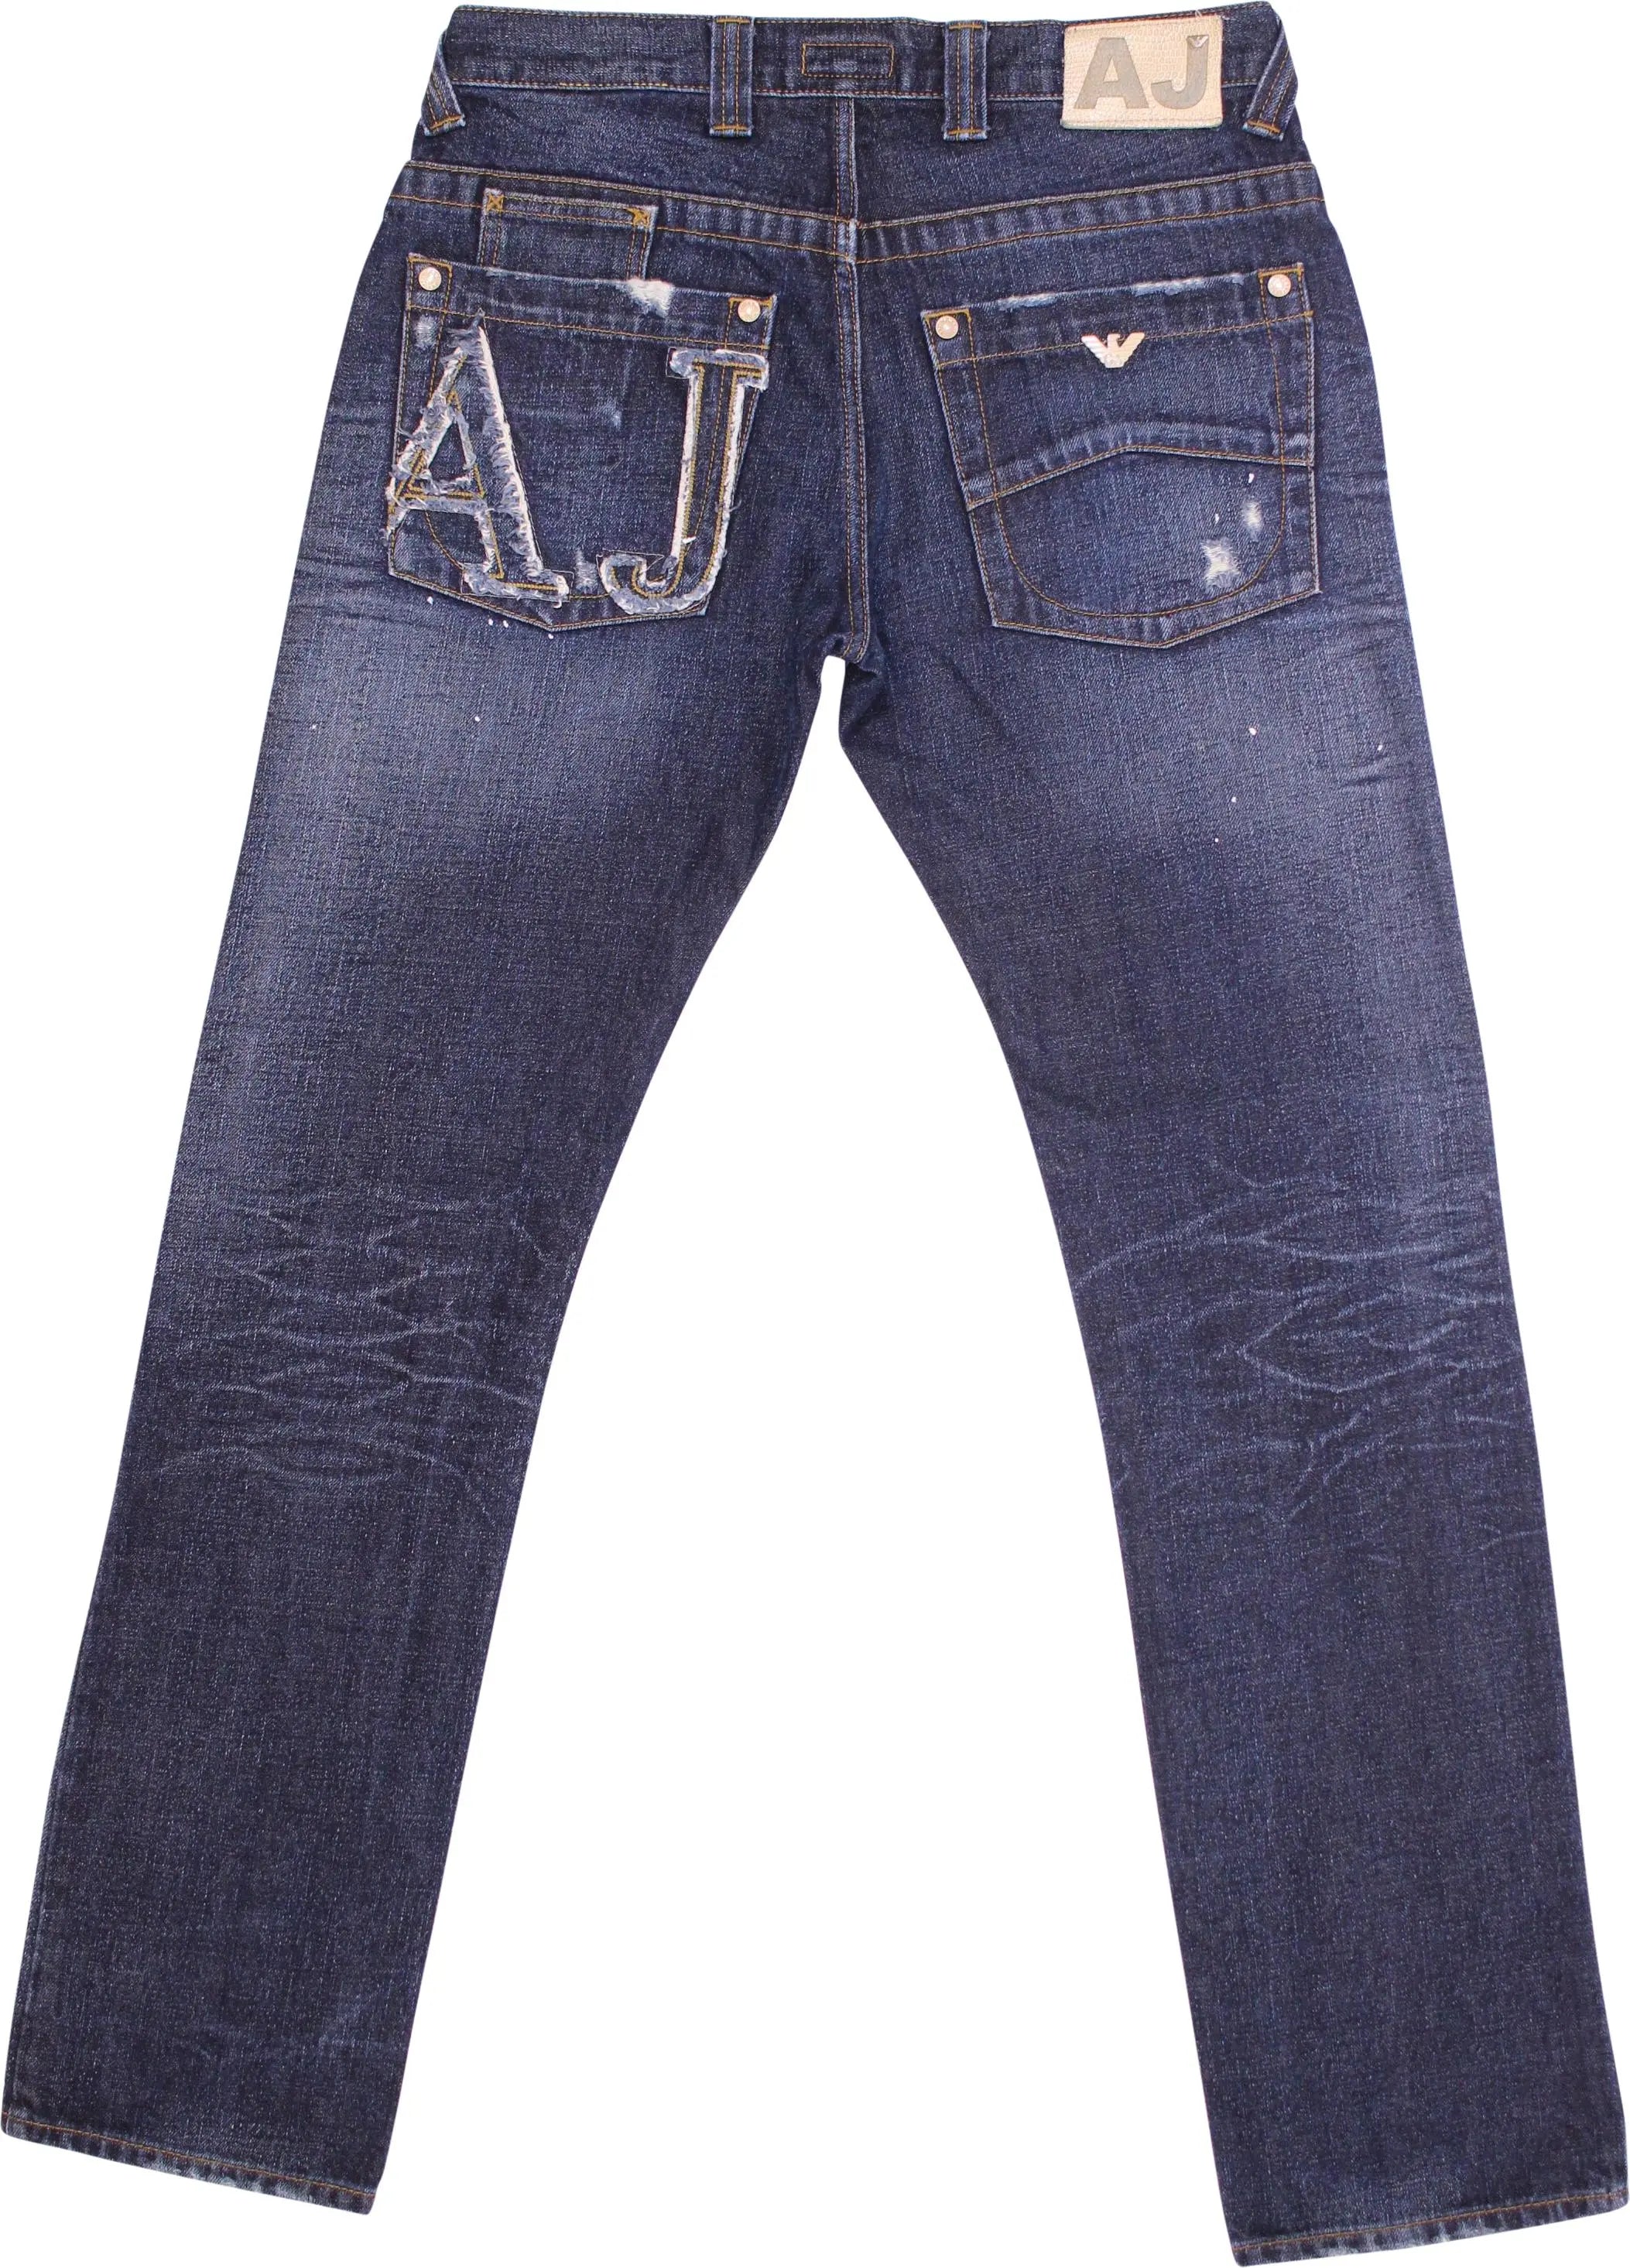 Armani Jeans - Armani Jeans Denim- ThriftTale.com - Vintage and second handclothing